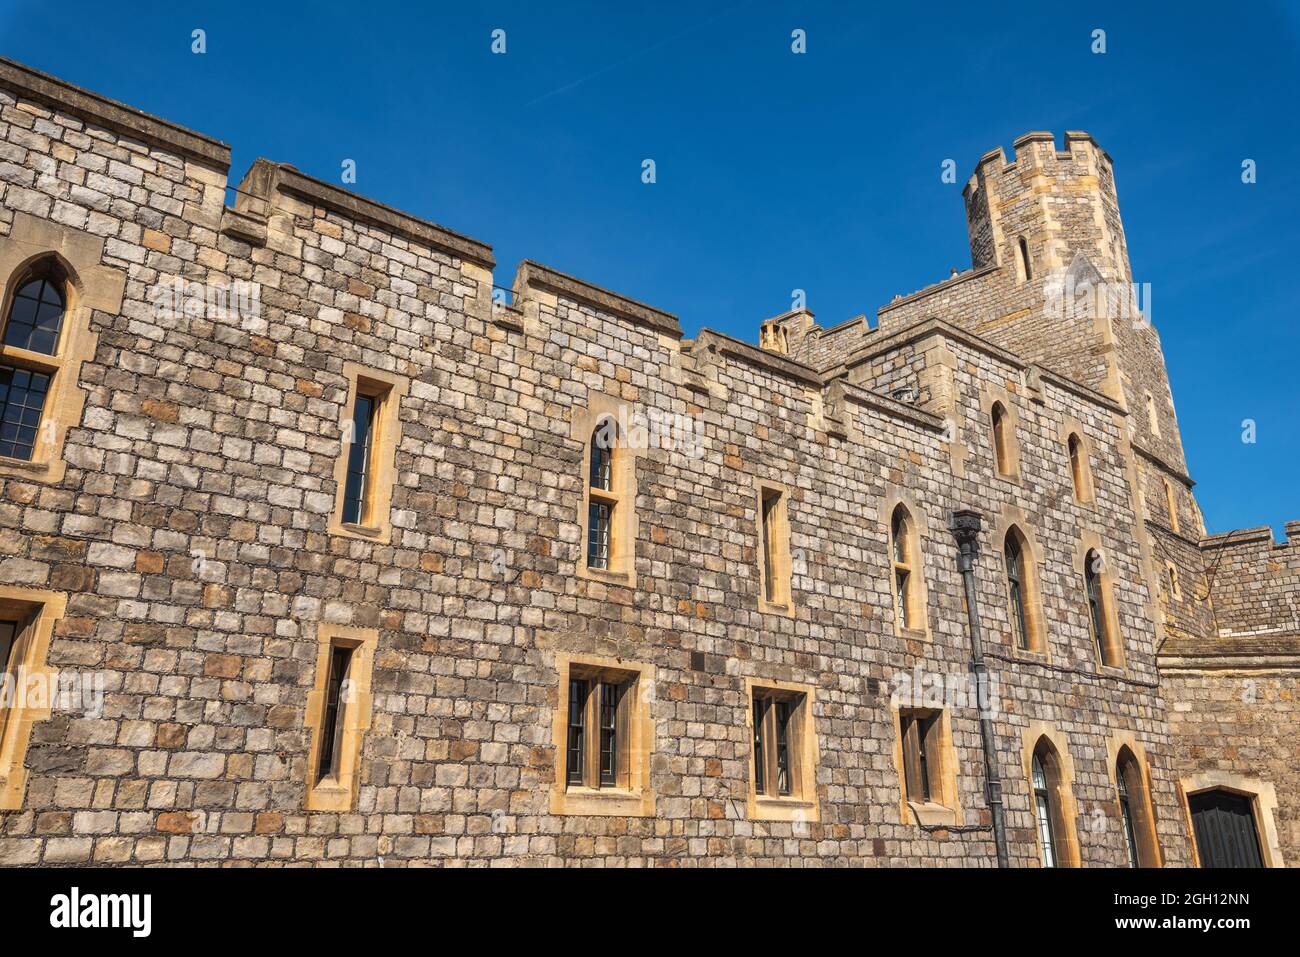 Windsor castle walls in England, United Kingdom. Stock Photo